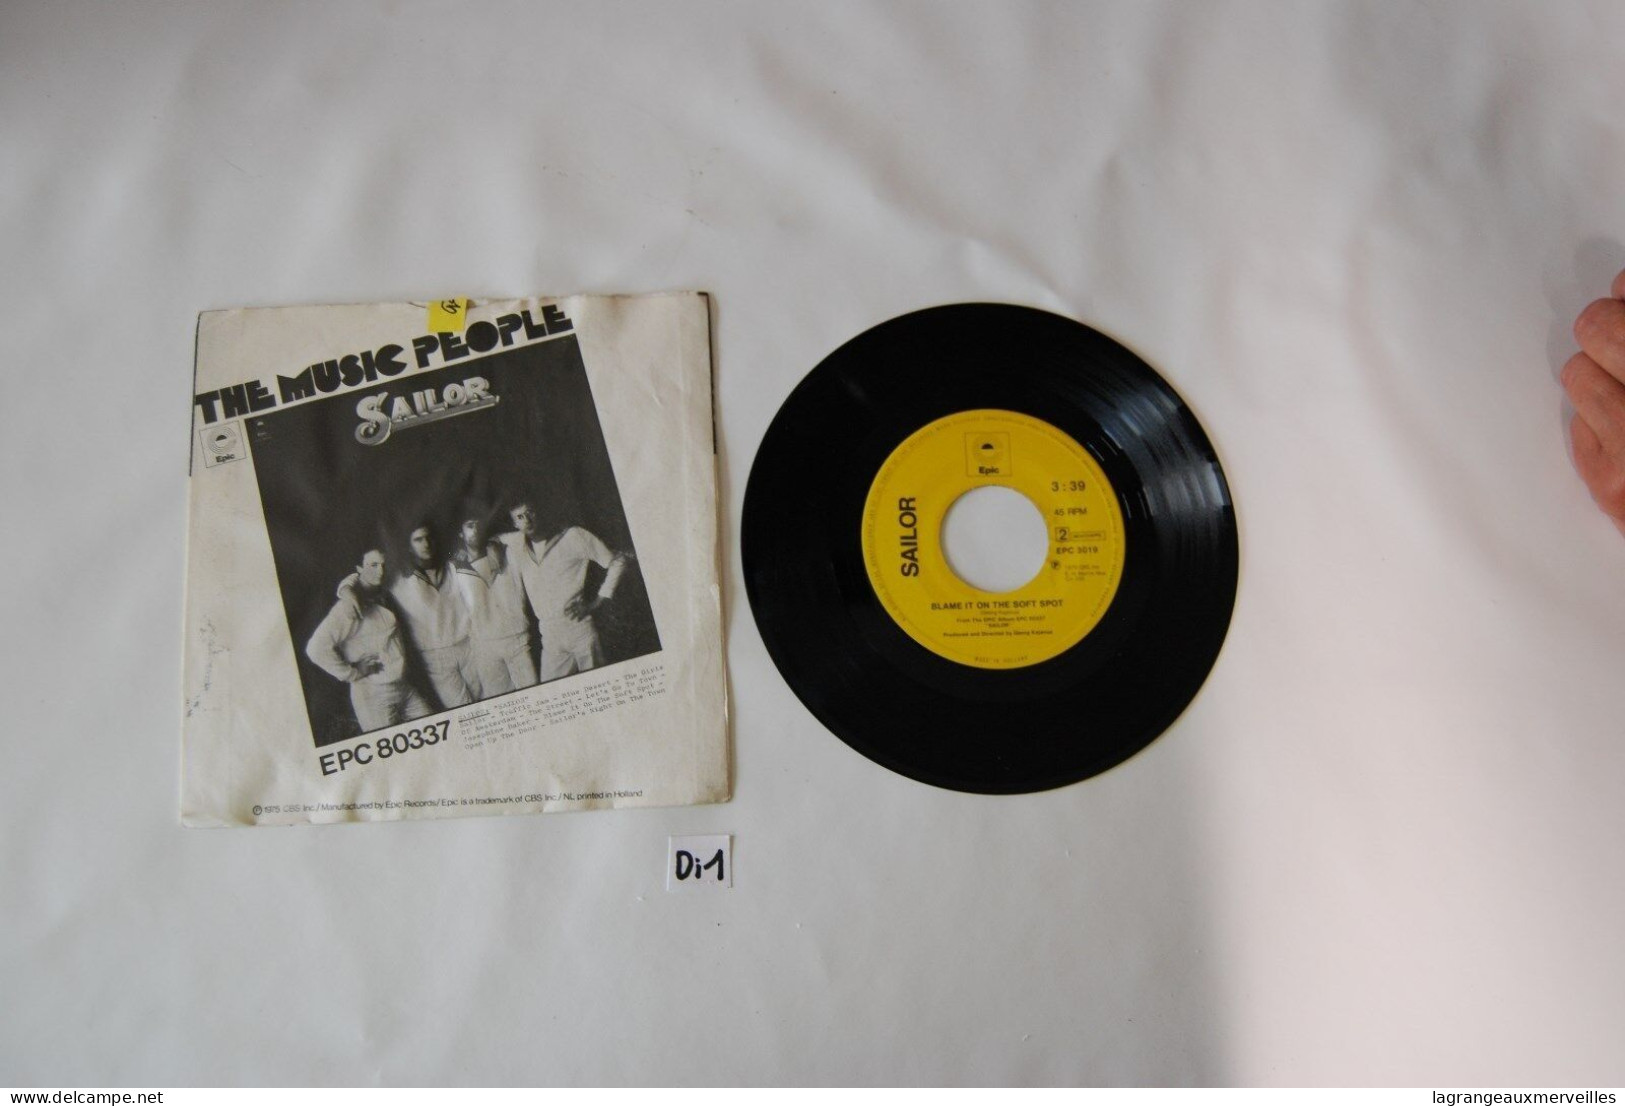 Di1- Vinyl 45 T - Sailor - The Music People Epc 80337 - Country Et Folk